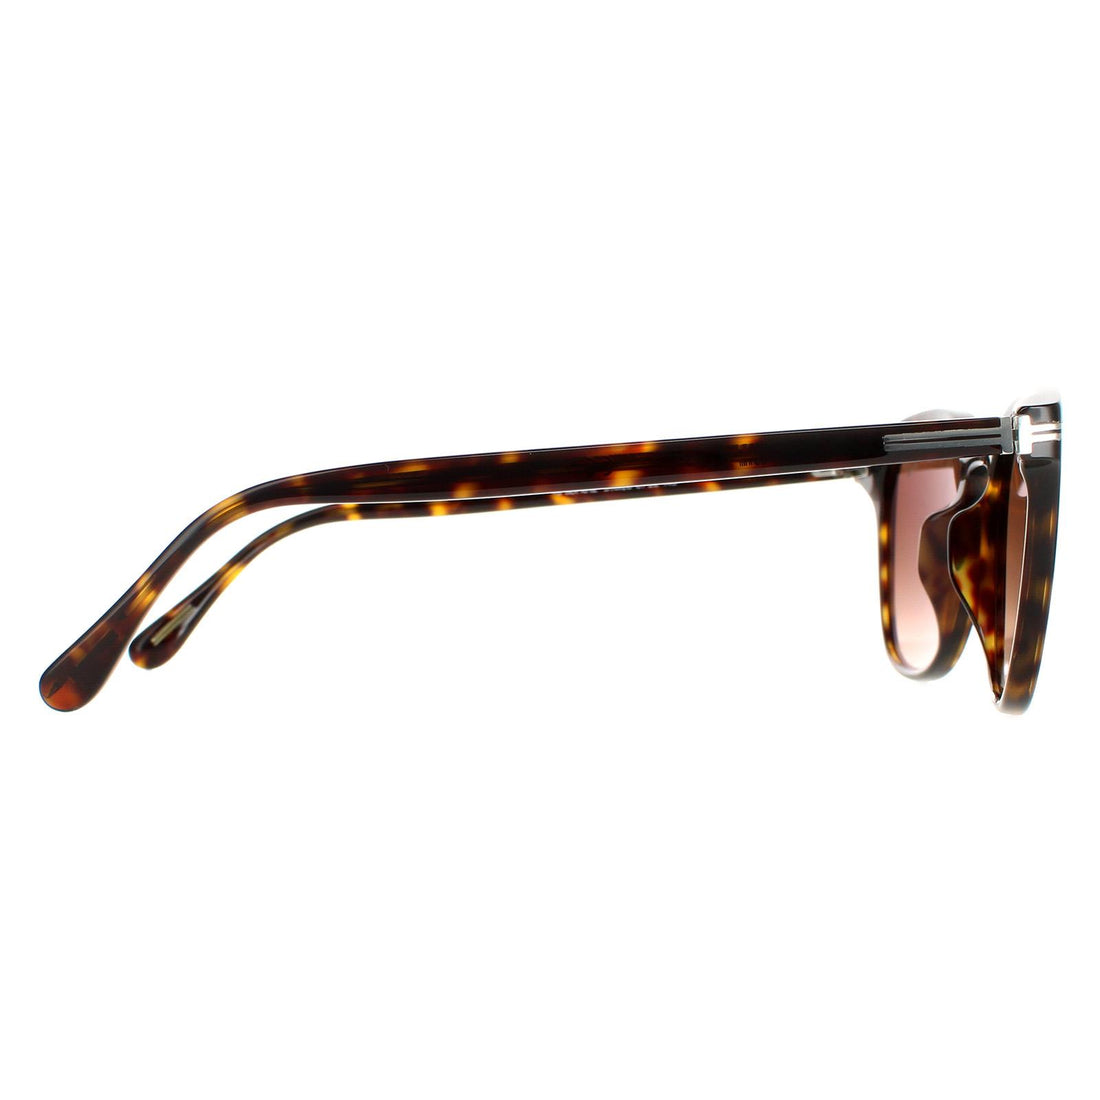 Dunhill Sunglasses SDH012 722 Tortoise Brown